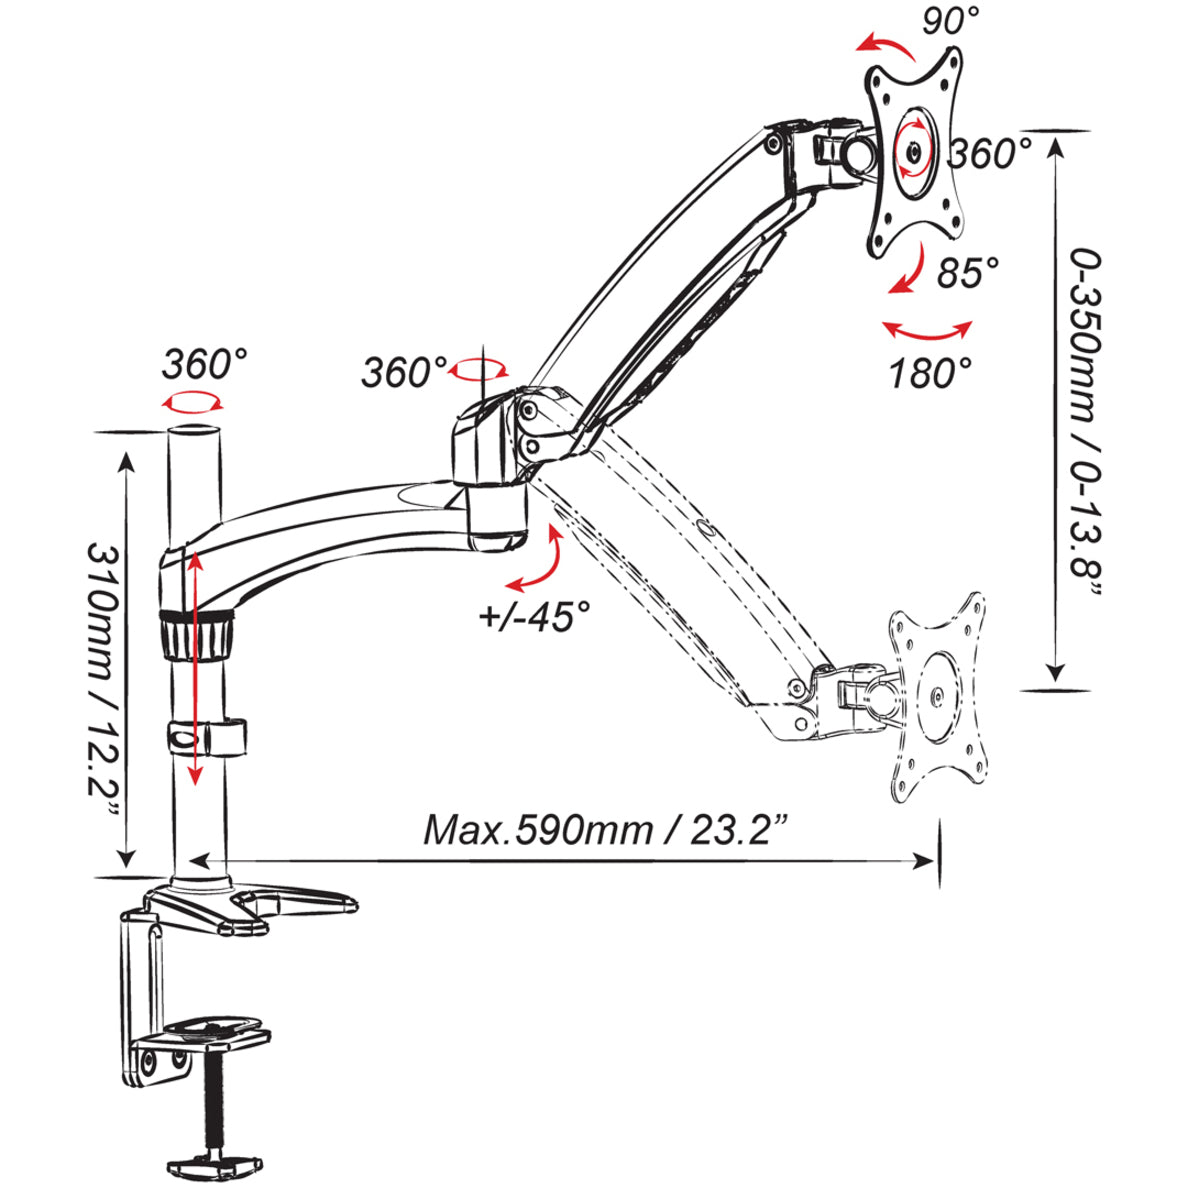 Amer Mounts HYDRA1 Single Monitor Mount with Articulating Arm, Extendable, Tilt, Swivel, Durable, Ergonomic